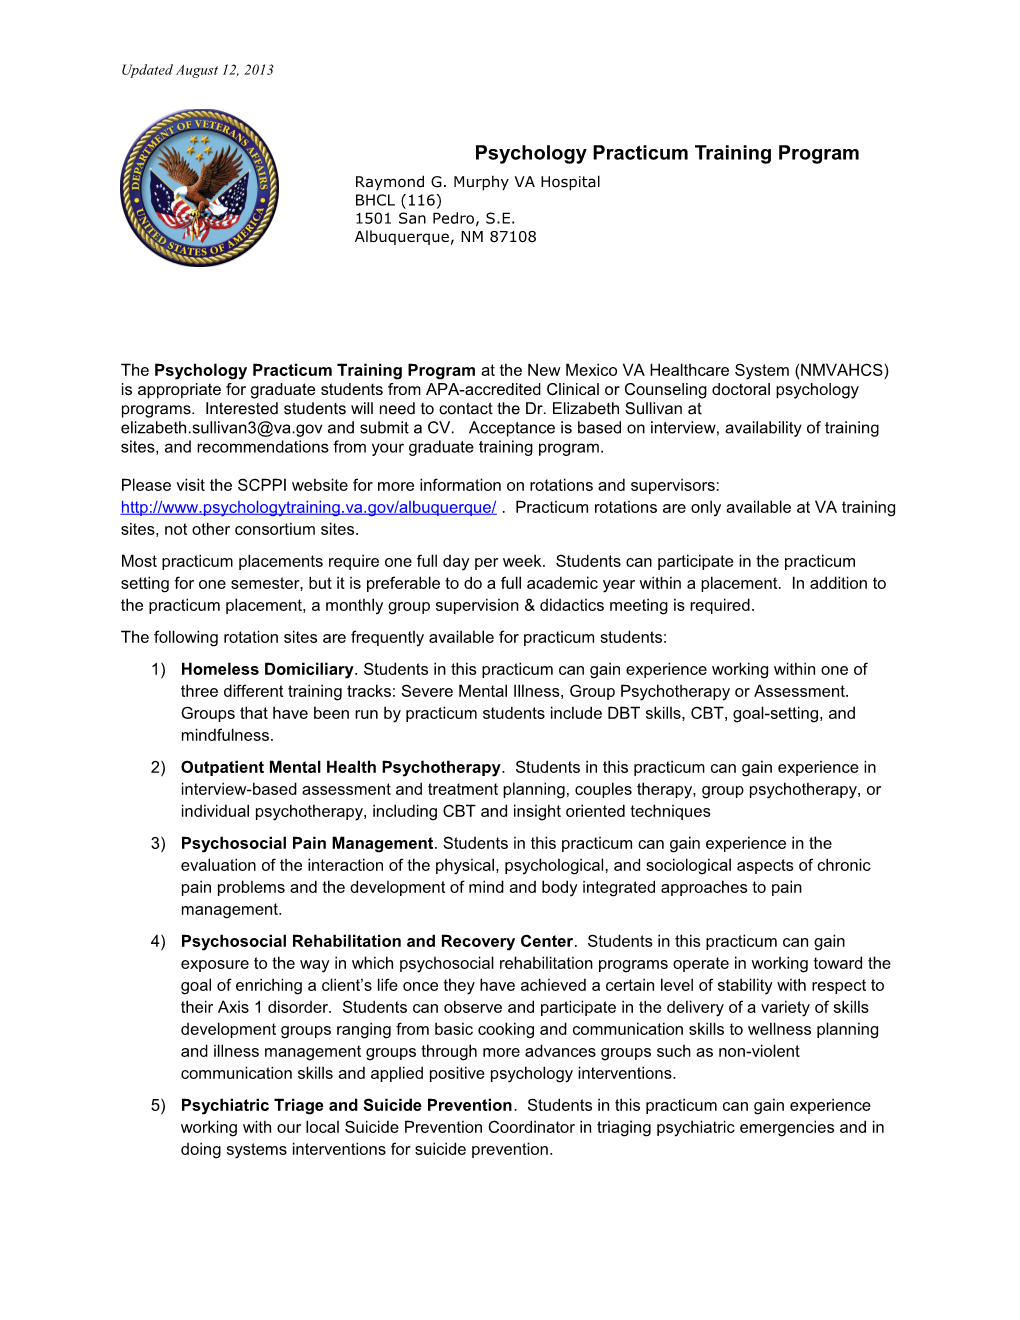 Psychology Practicum Training Program - U.S. Department of Veterans Affairs